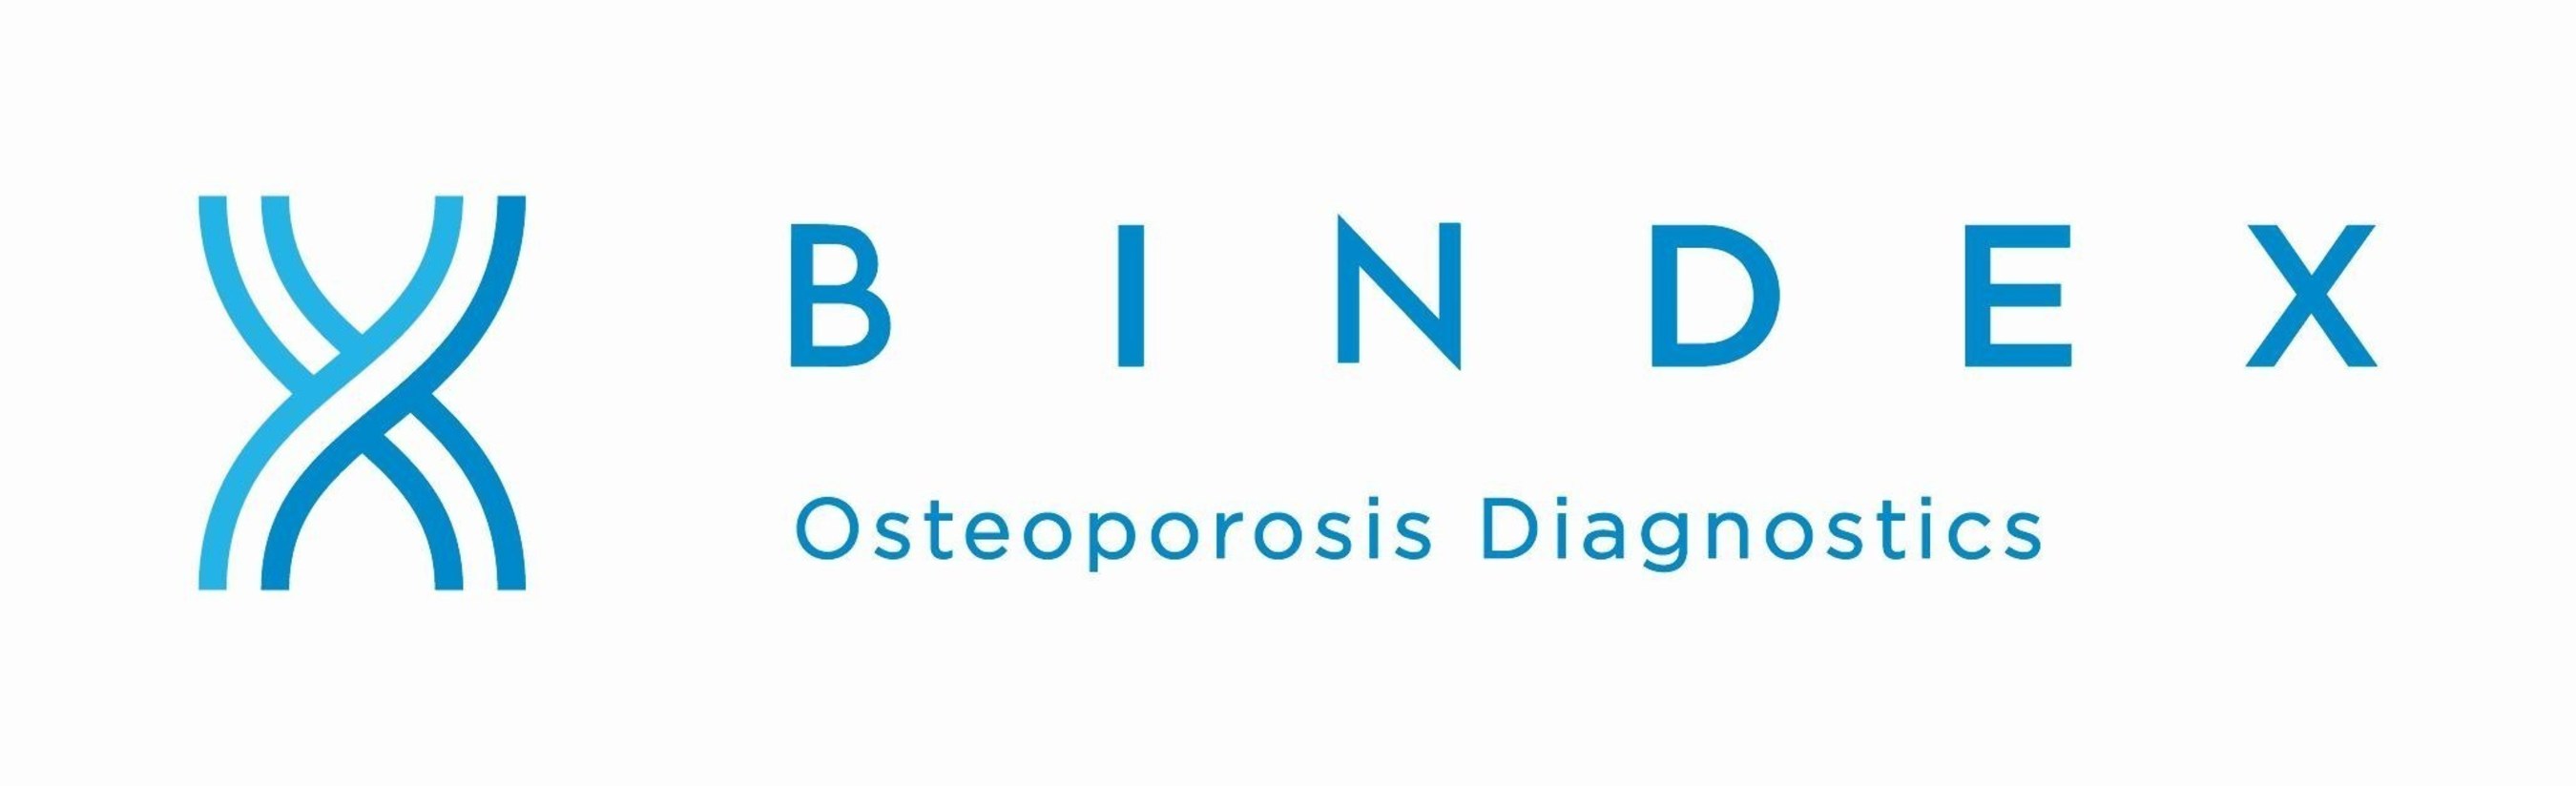 Bindex Osteoporosis Diagnostics (PRNewsFoto/Bindex Osteoporosis Diagnostics)